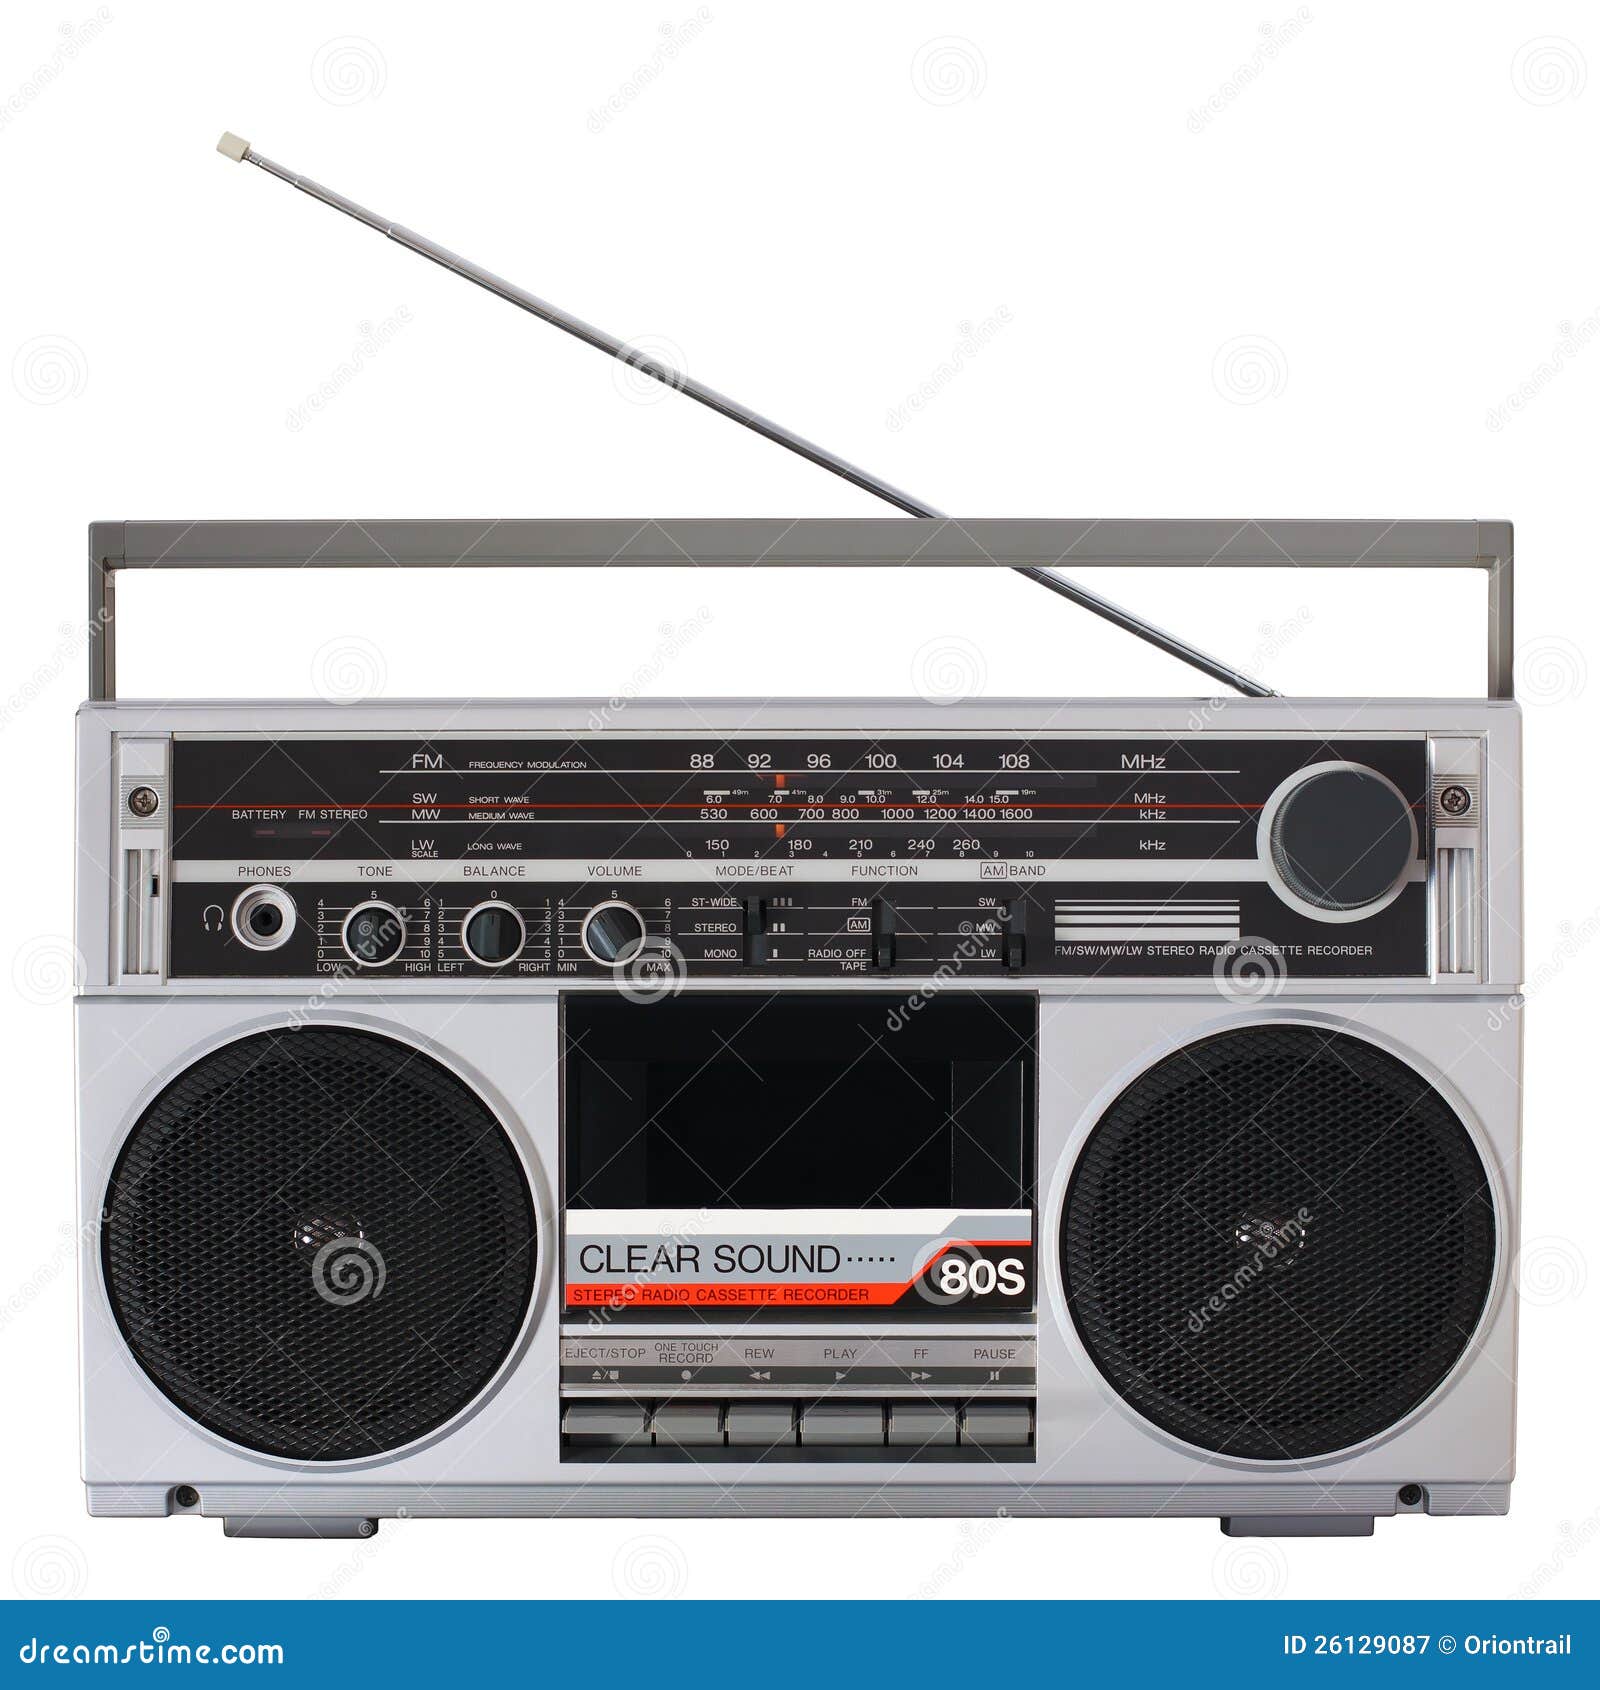 Retro Radio Cassette Player Stock Image - Image of player, music: 26129087